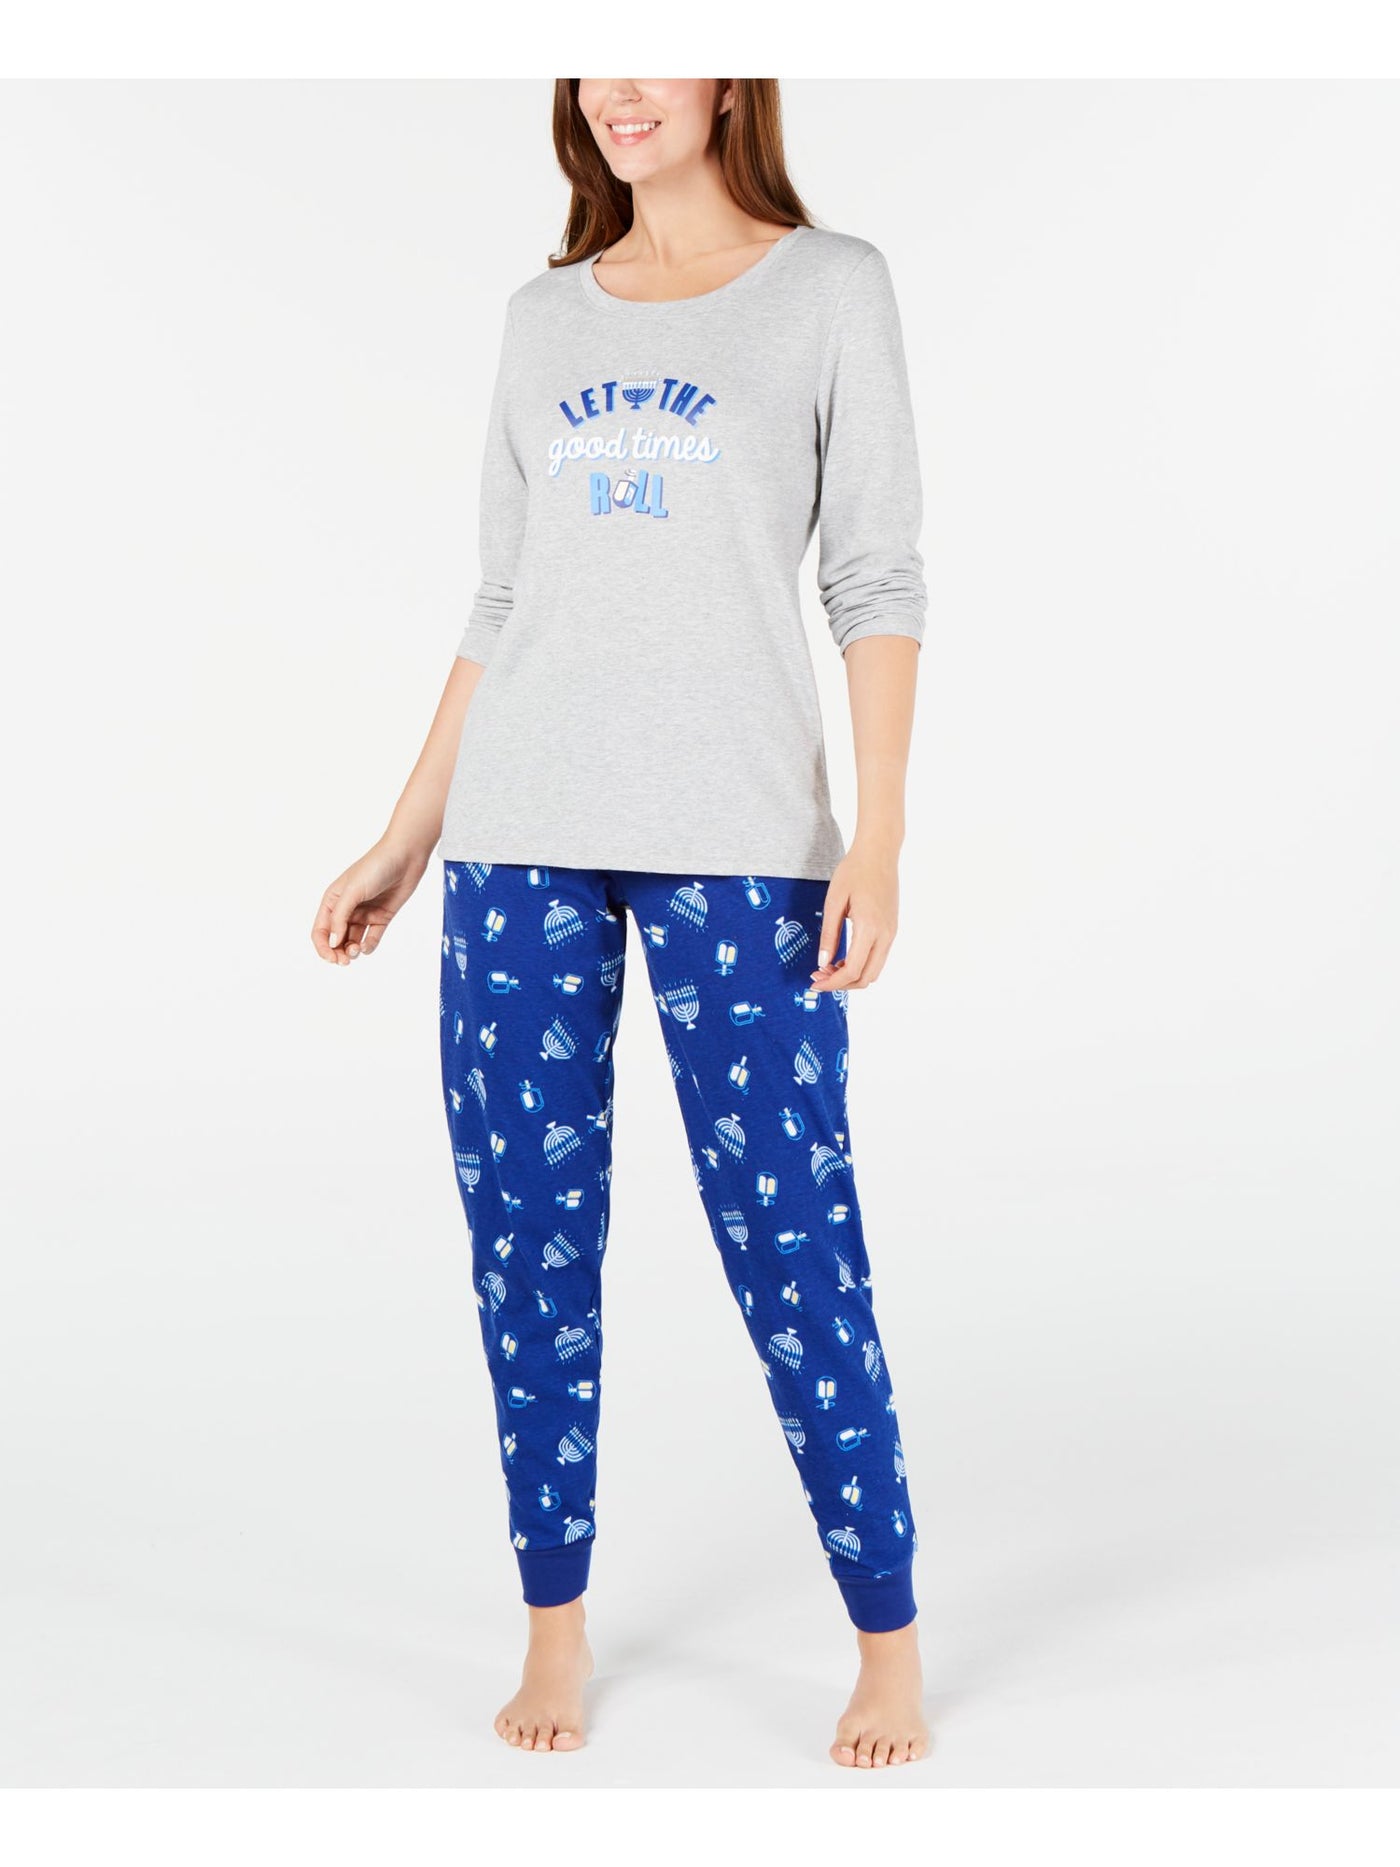 FAMILY PJs Womens Blue Printed T-Shirt Top Lounge Pants Pajamas M